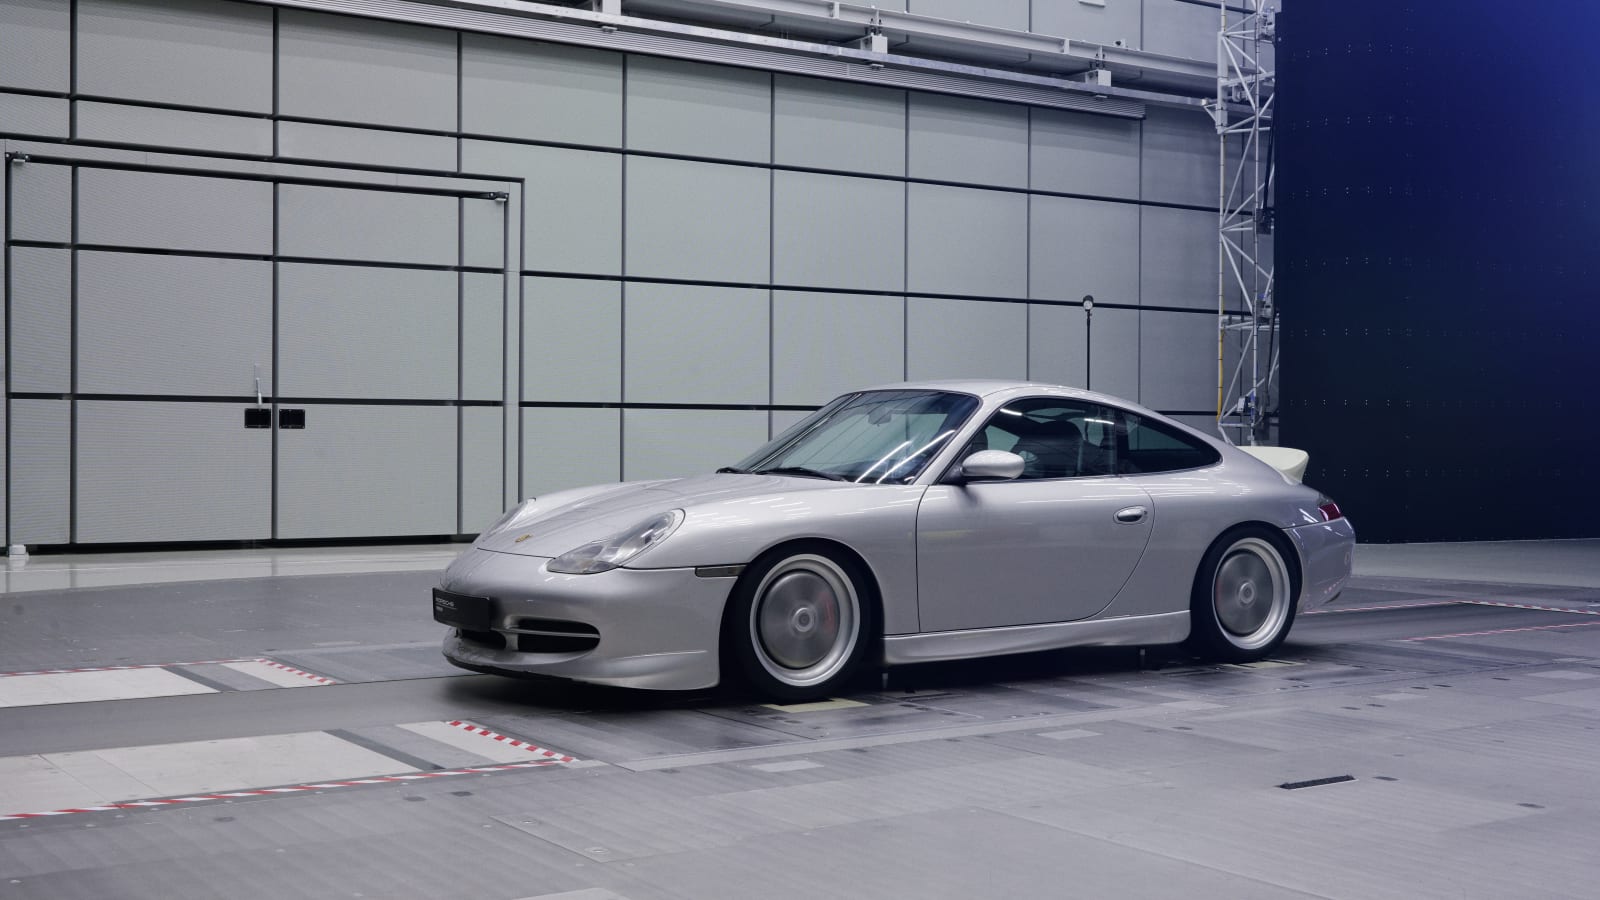 Porsche 911 Classic Club Coupe als episches 996-Restaurationsprojekt enthüllt